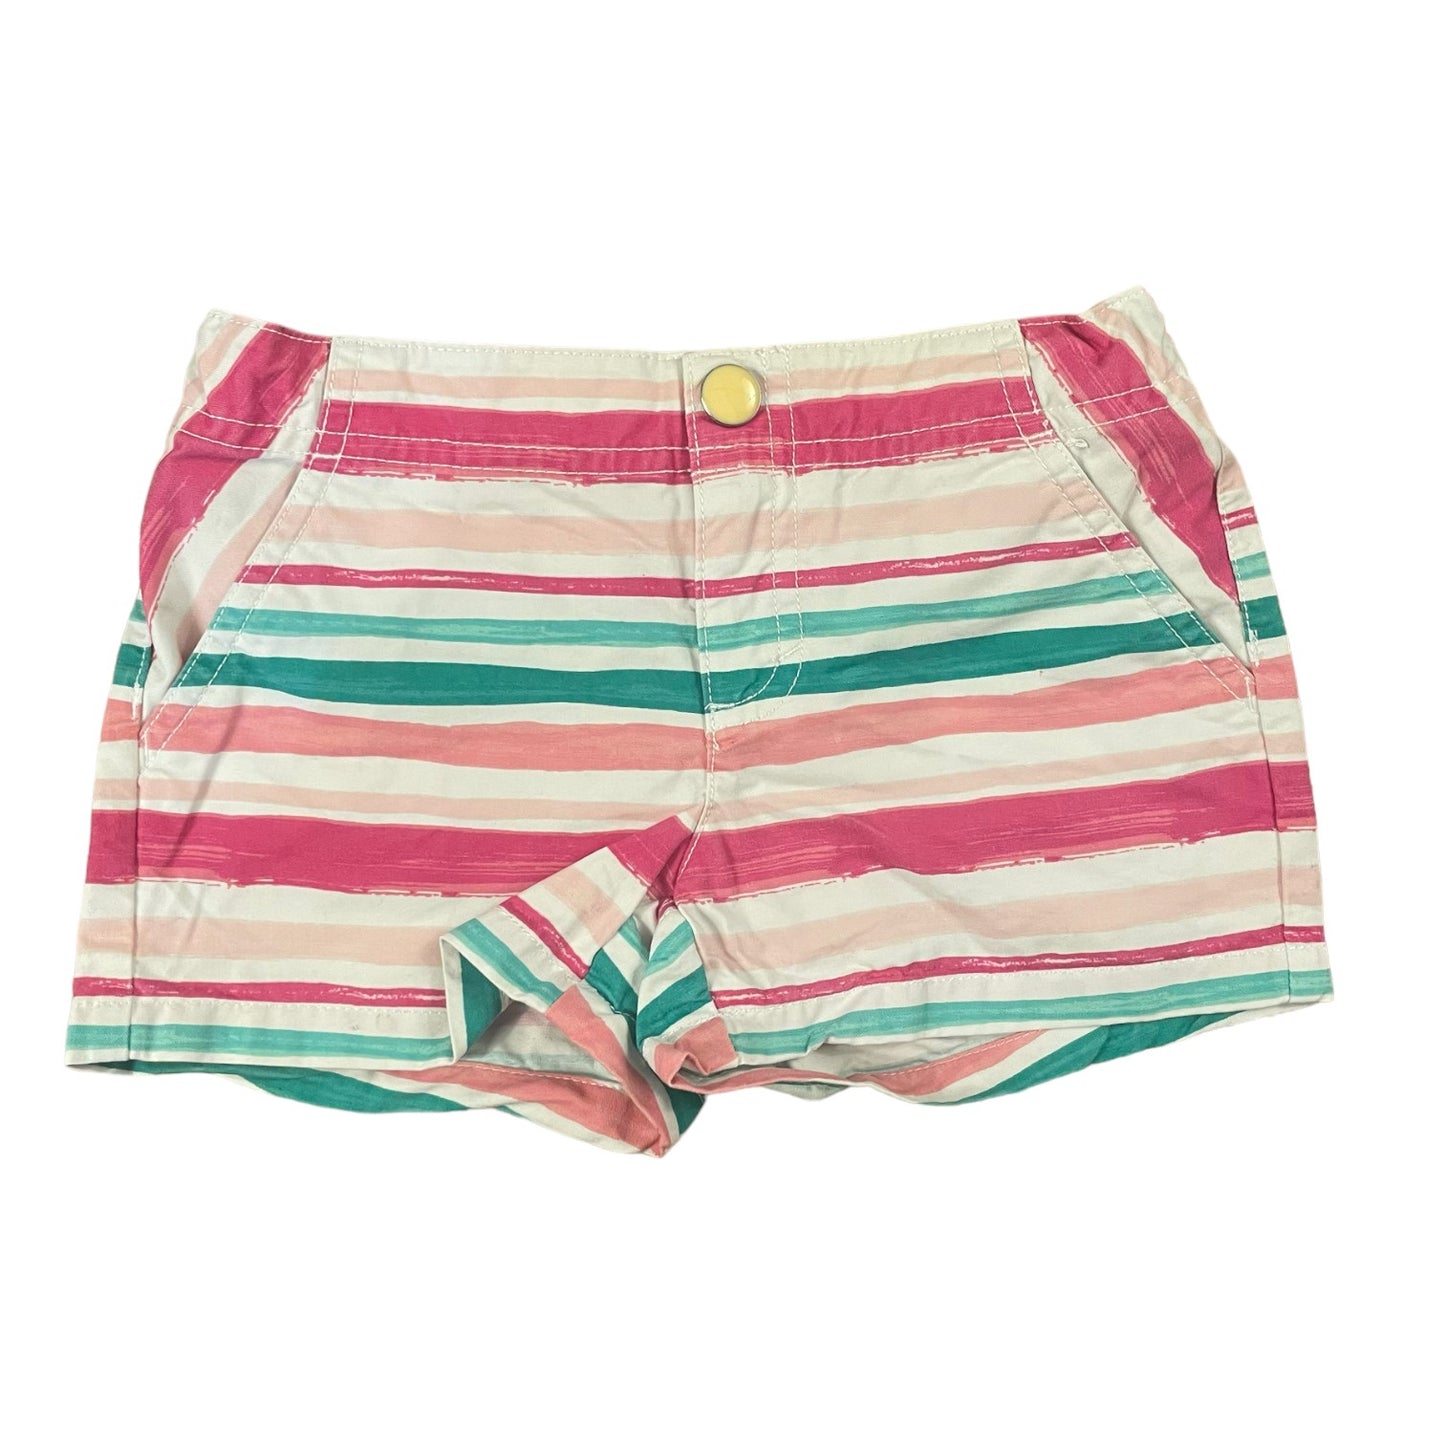 Gymboree Pink Stripe Girls Shorts Size 5